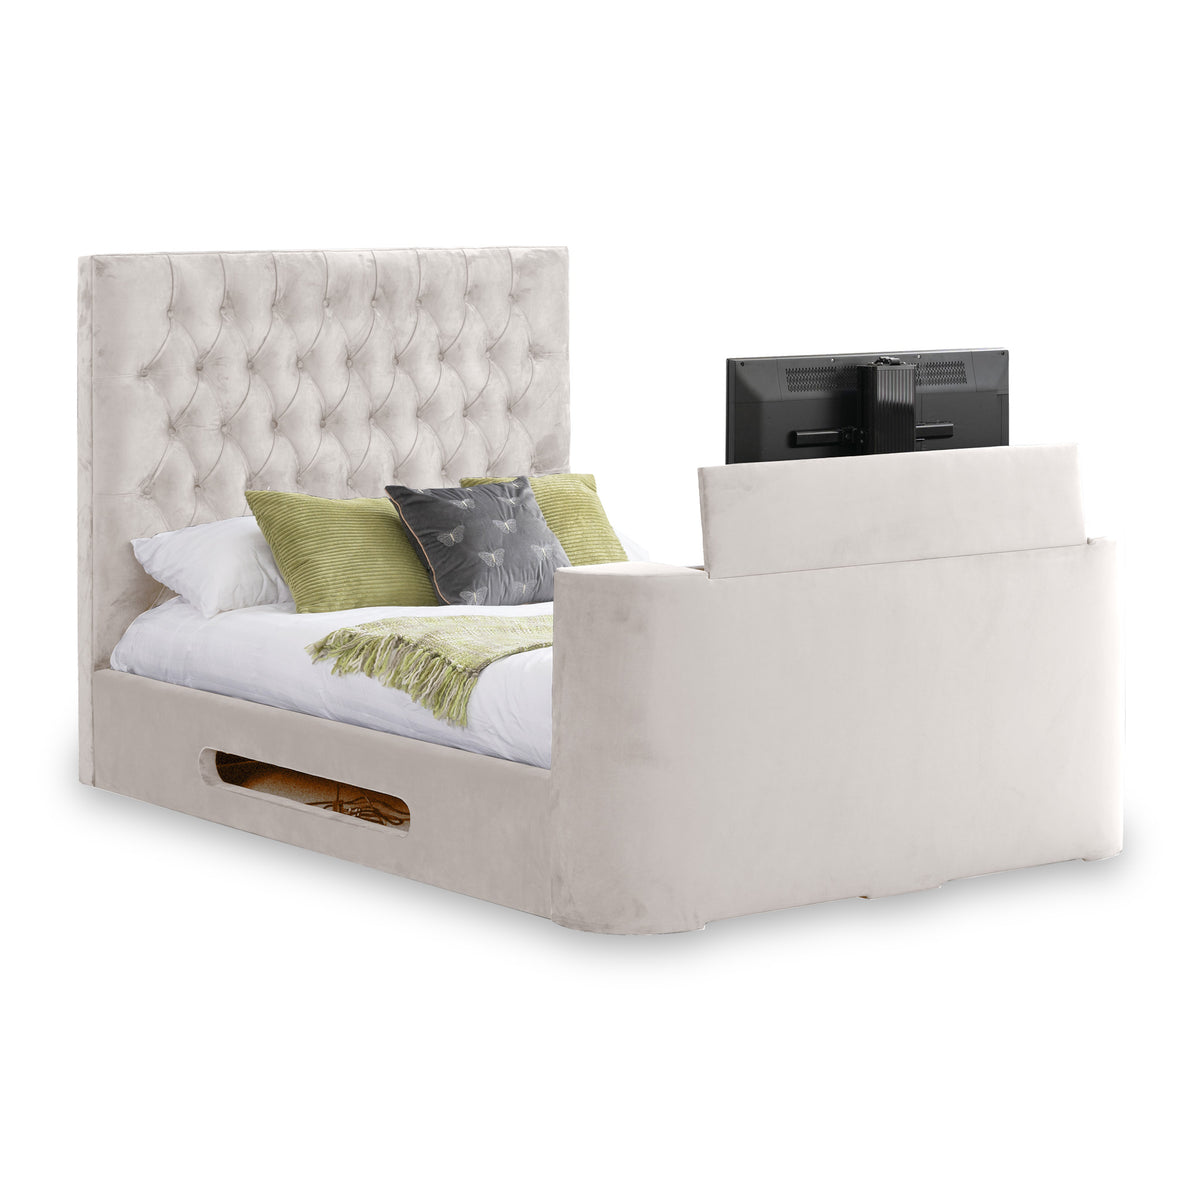 Tilly Velvet TV Bed Frame in Chatsworth Oyster by Roseland Furniture